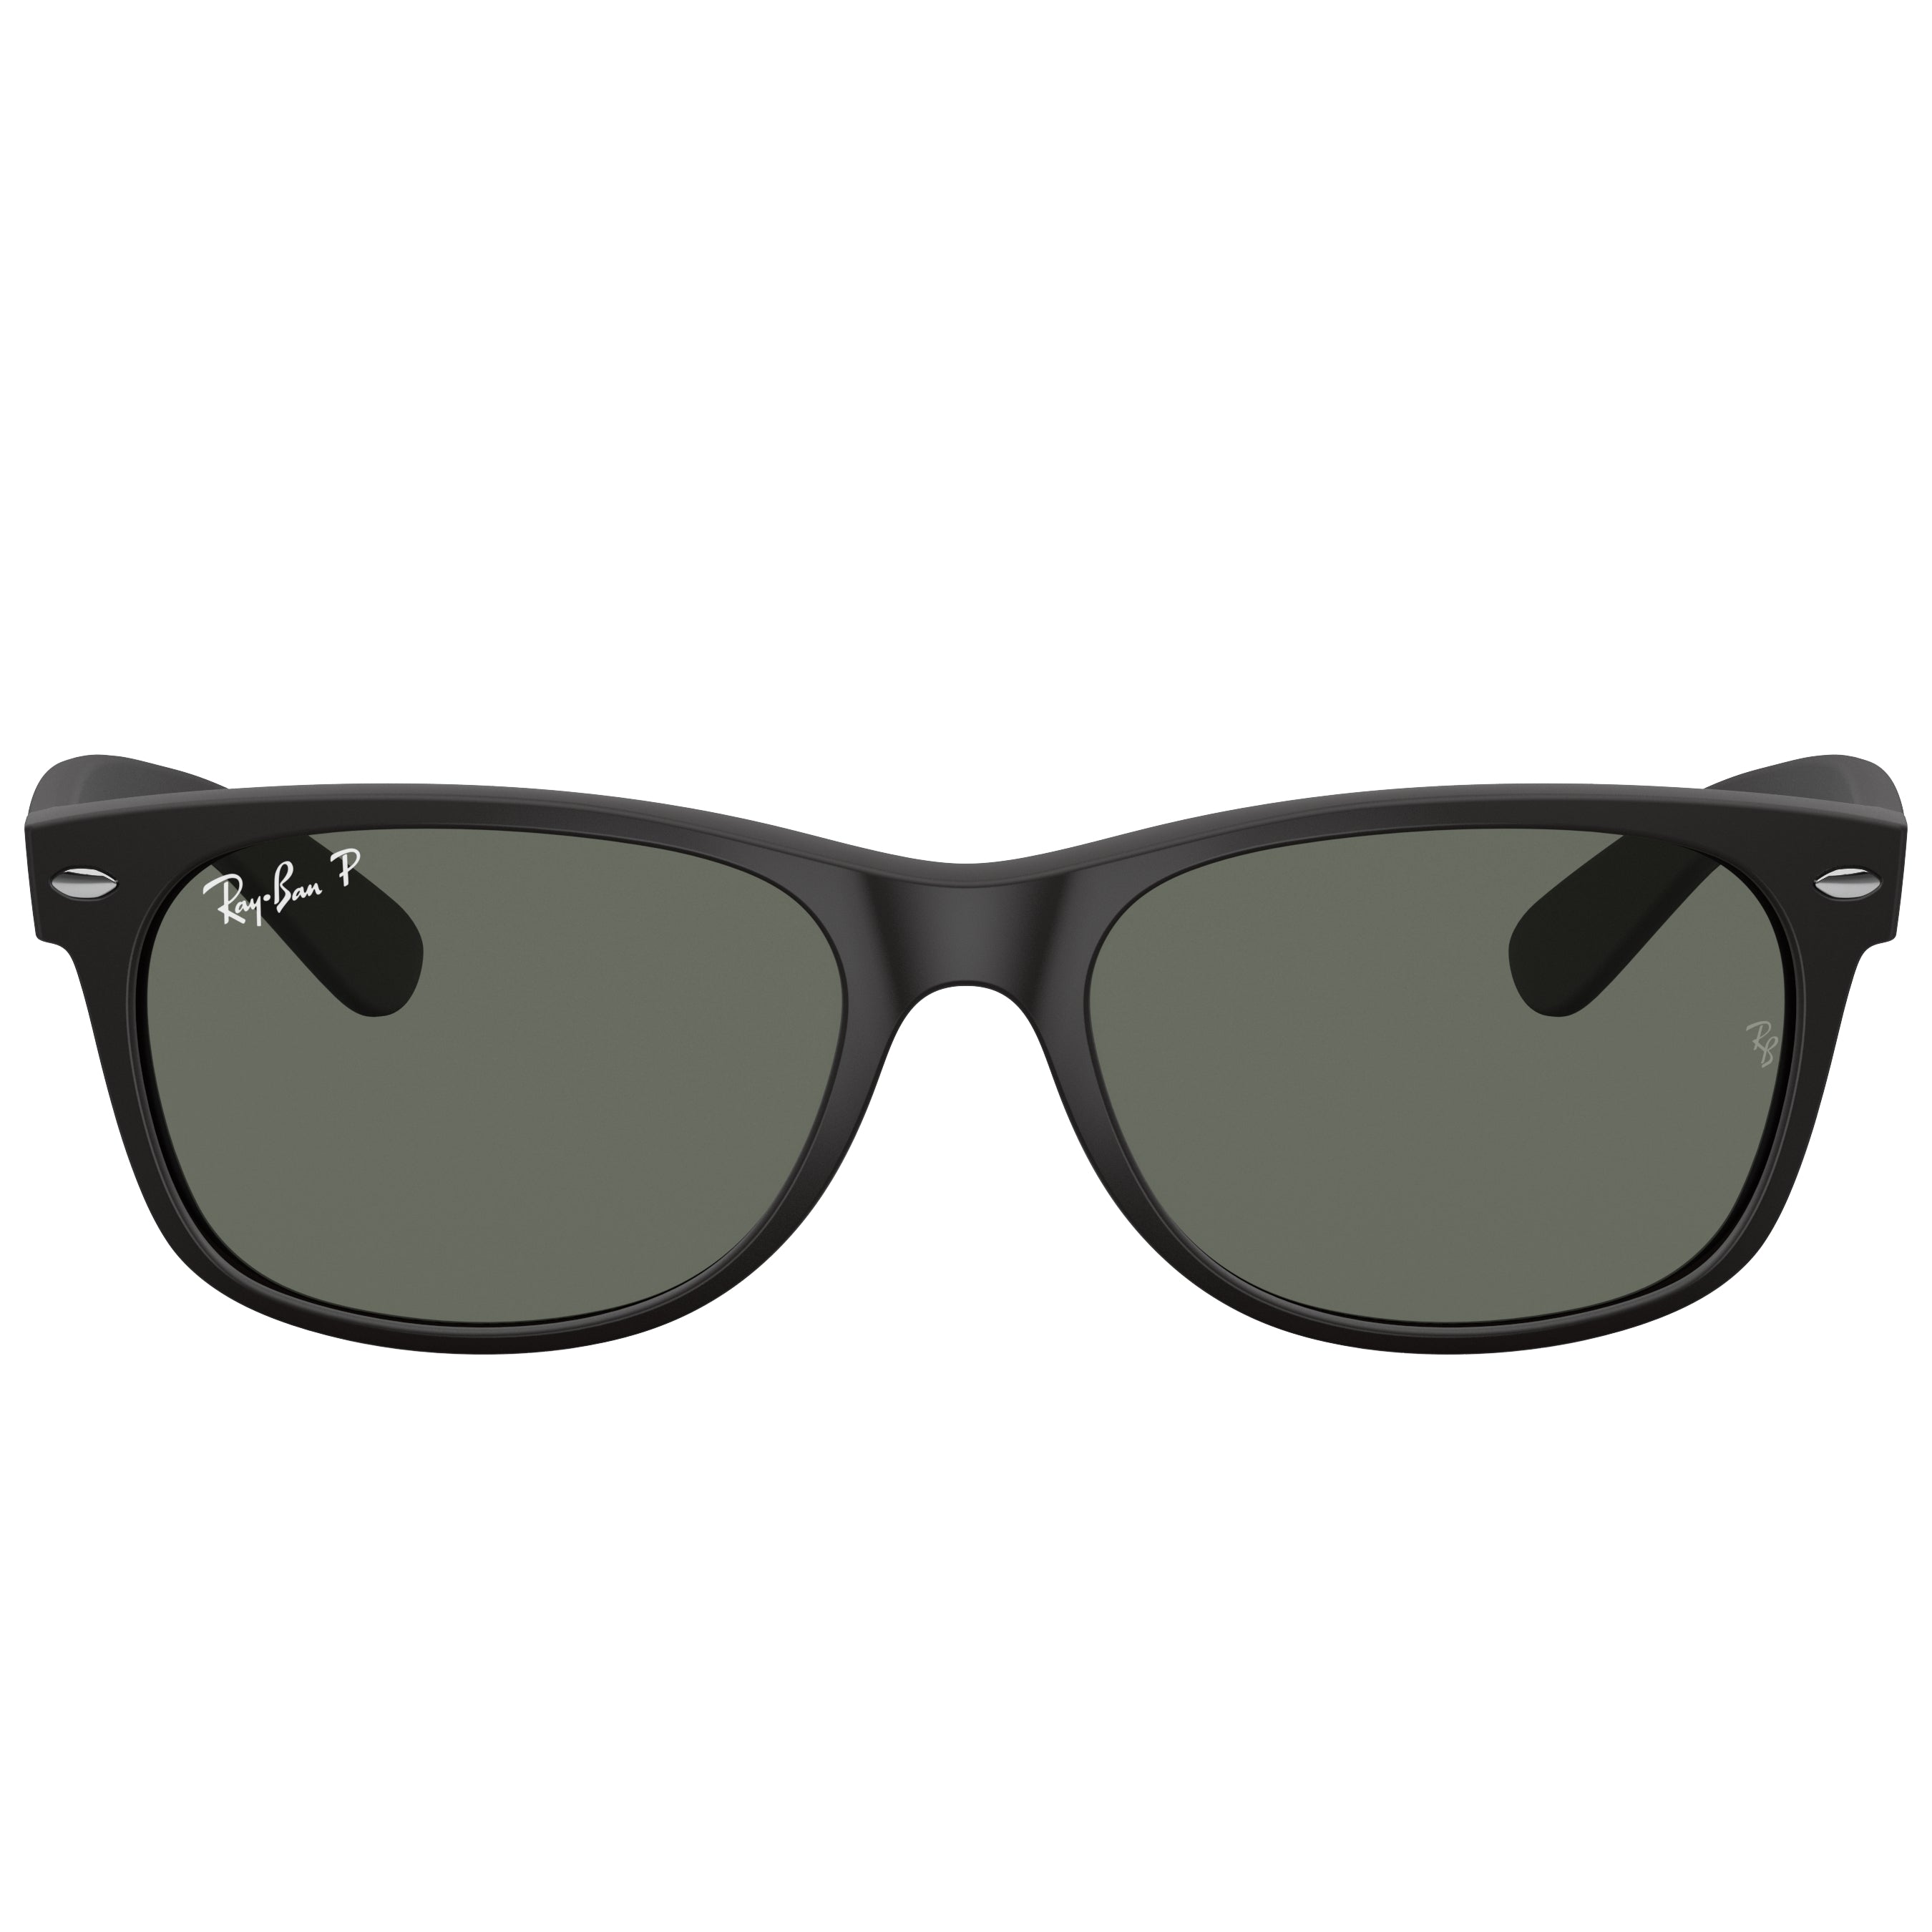 Ray-Ban New Wayfarer Green Classic G-15 Polarized Square Men's Sunglasses RB2132 622/58 52